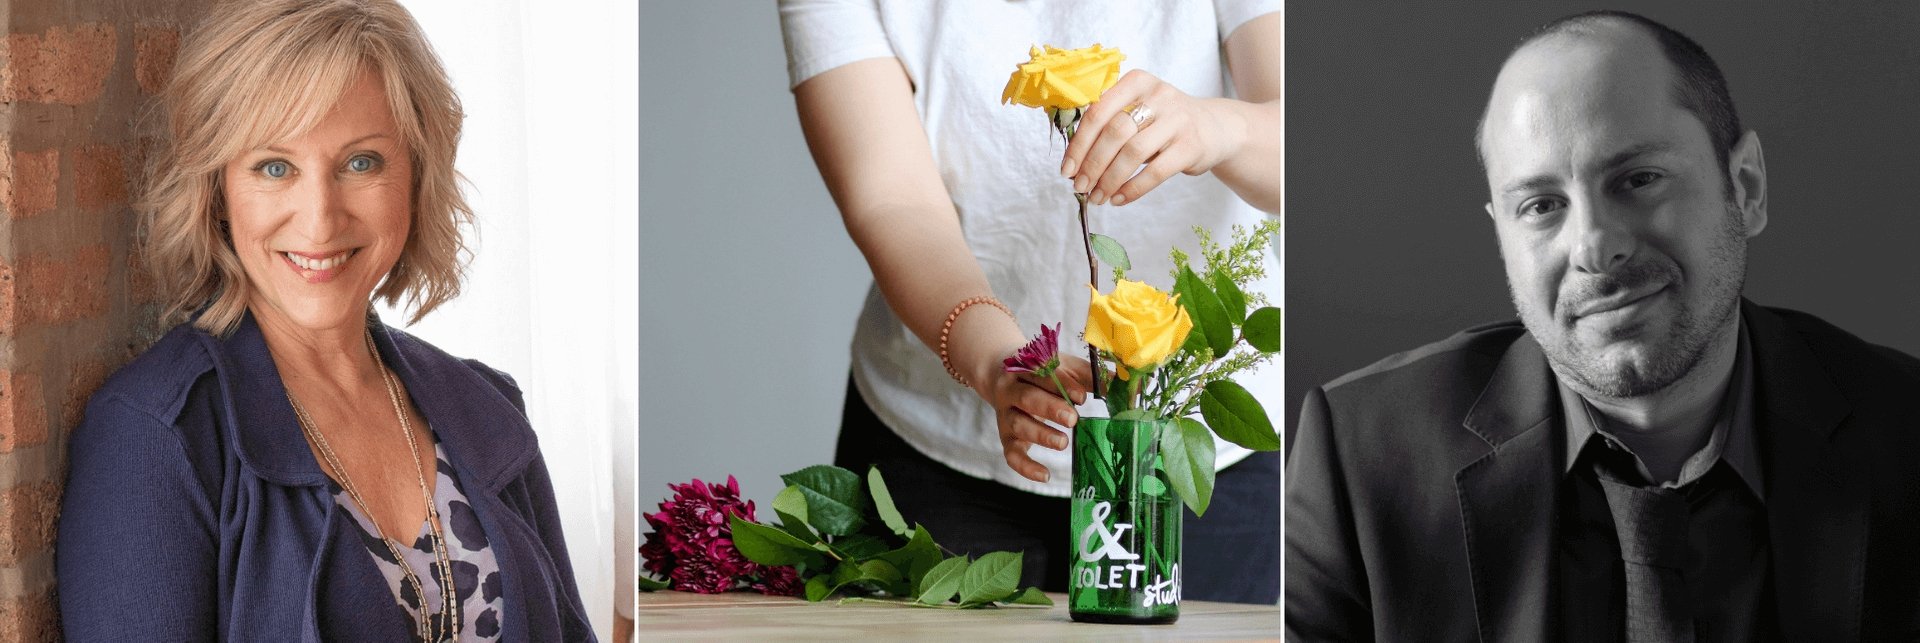 A Fresh Look | Headshots + Mini-Floral Workshop - May 15 - indigo & violet studio LLC